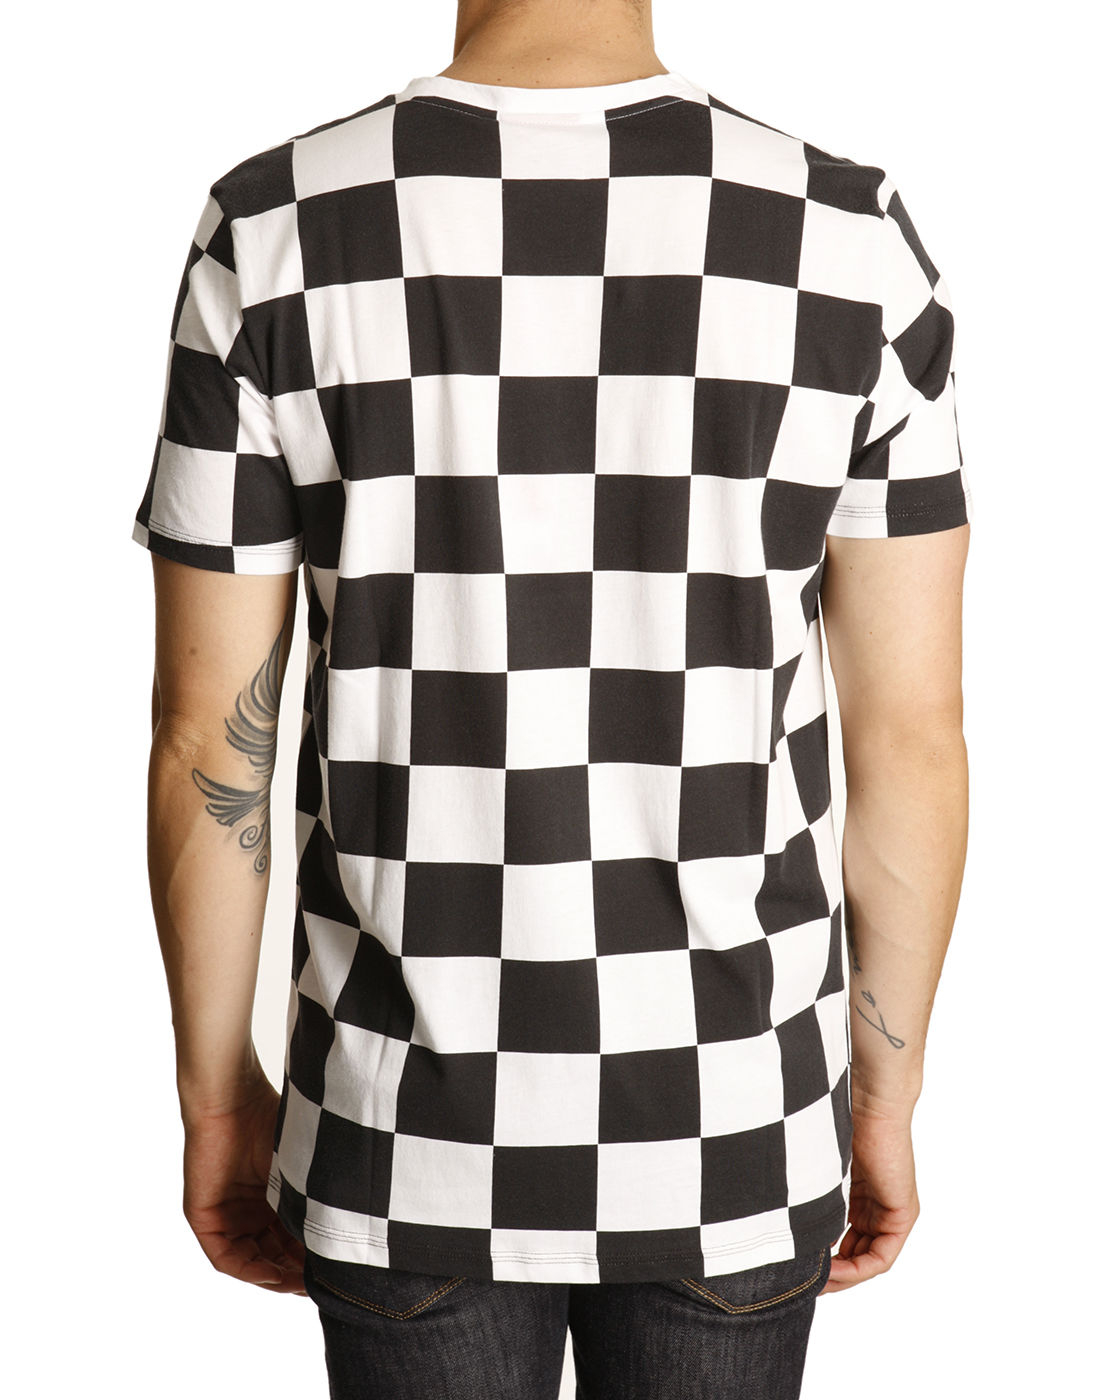 black and white checkered v neck sweater